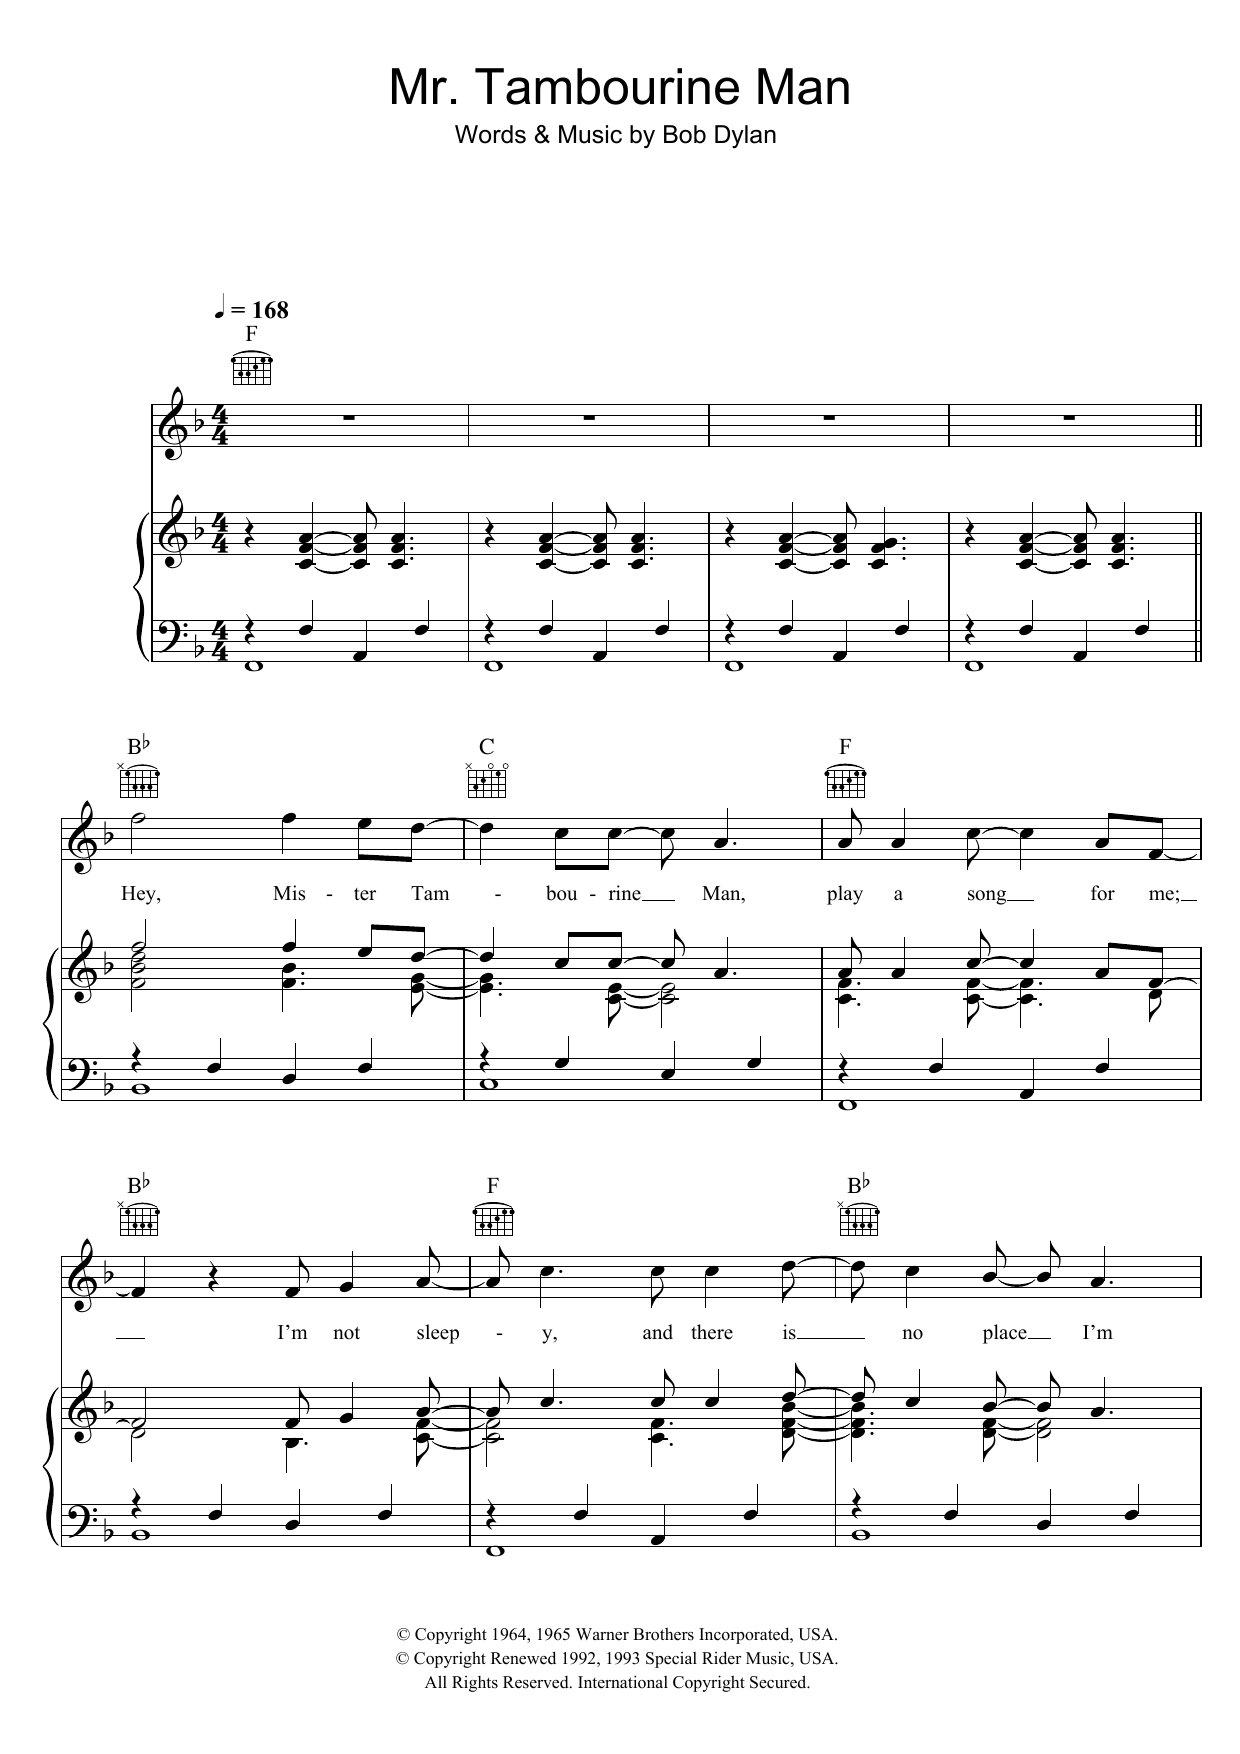 Bob Dylan Mr. Tambourine Man Sheet Music Notes & Chords for Ukulele with strumming patterns - Download or Print PDF